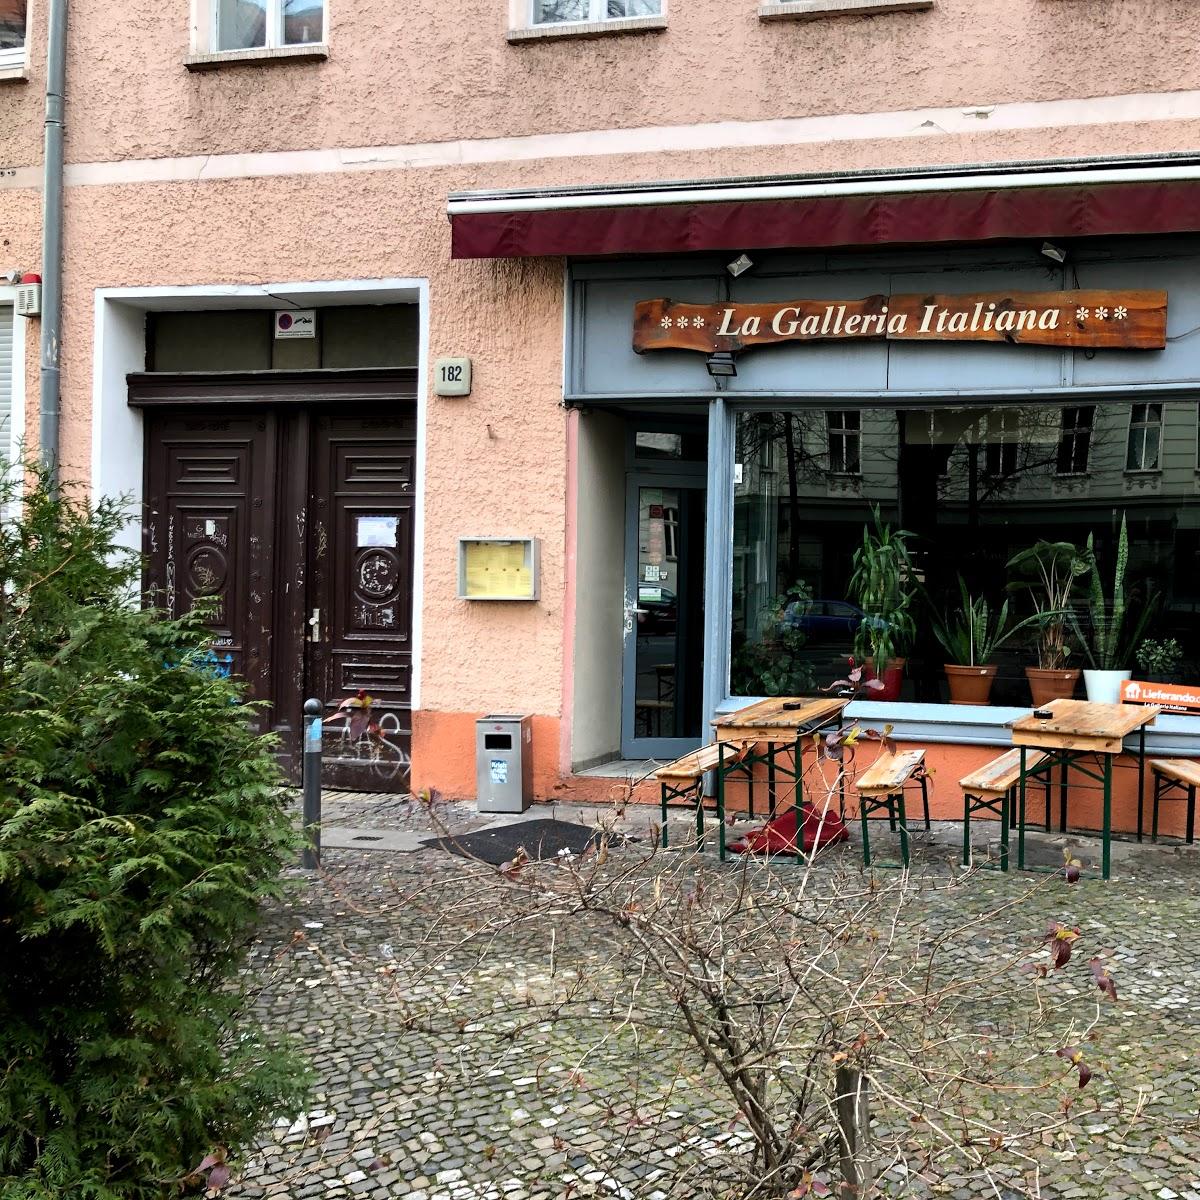 Restaurant "La Galleria Italiana" in Berlin